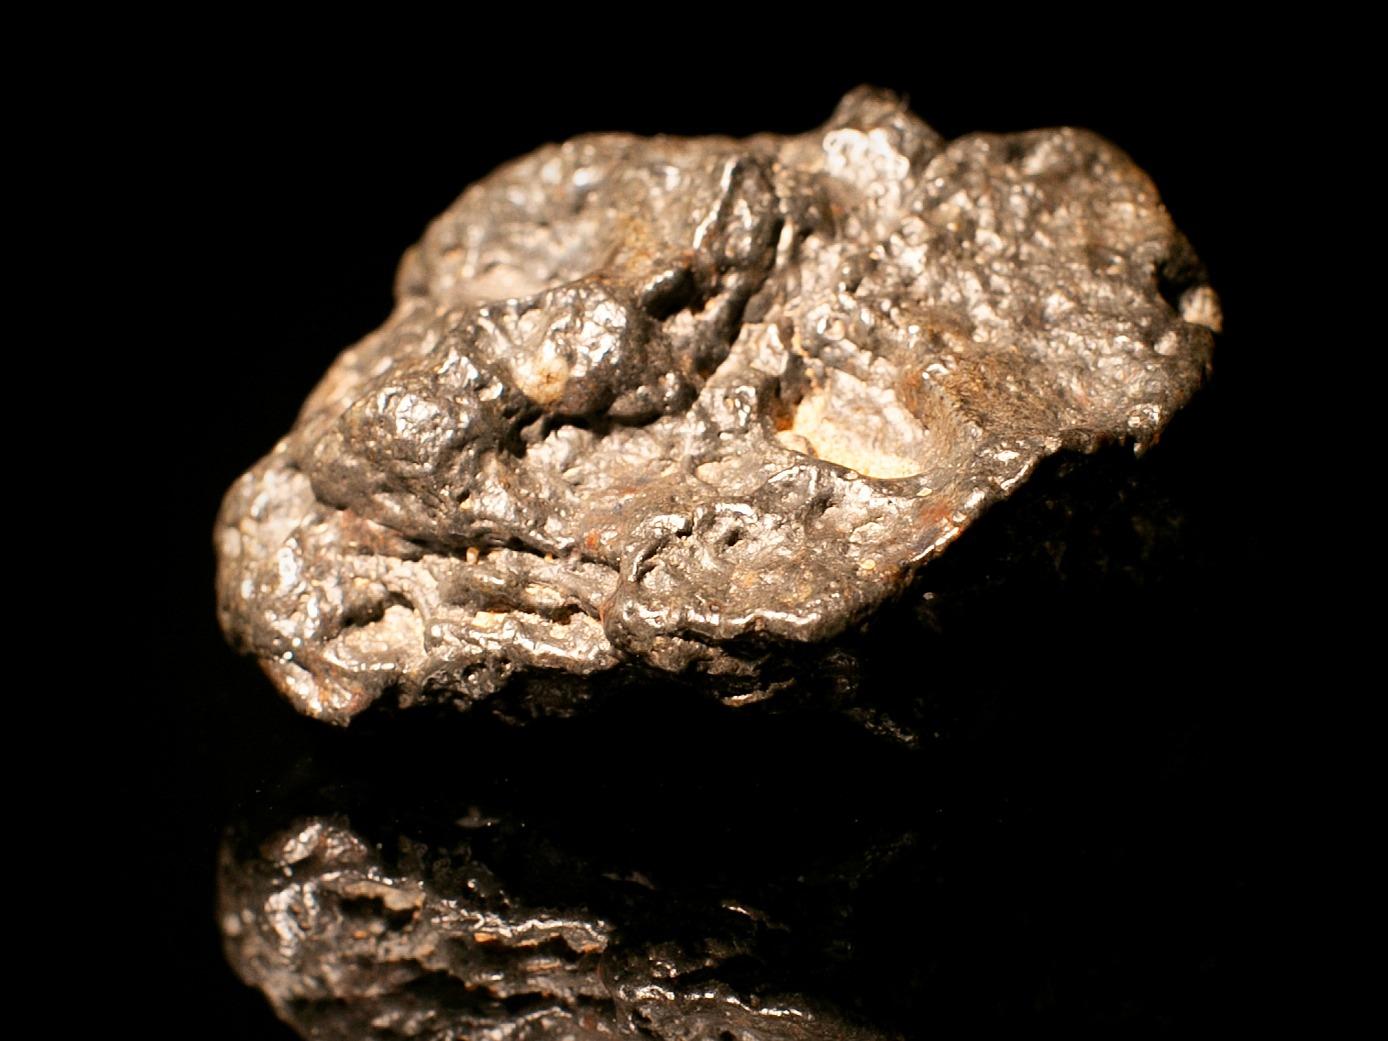 Meteorit | Lunárne NWA 13788 | Achondrit | 36,4g - Zberateľstvo